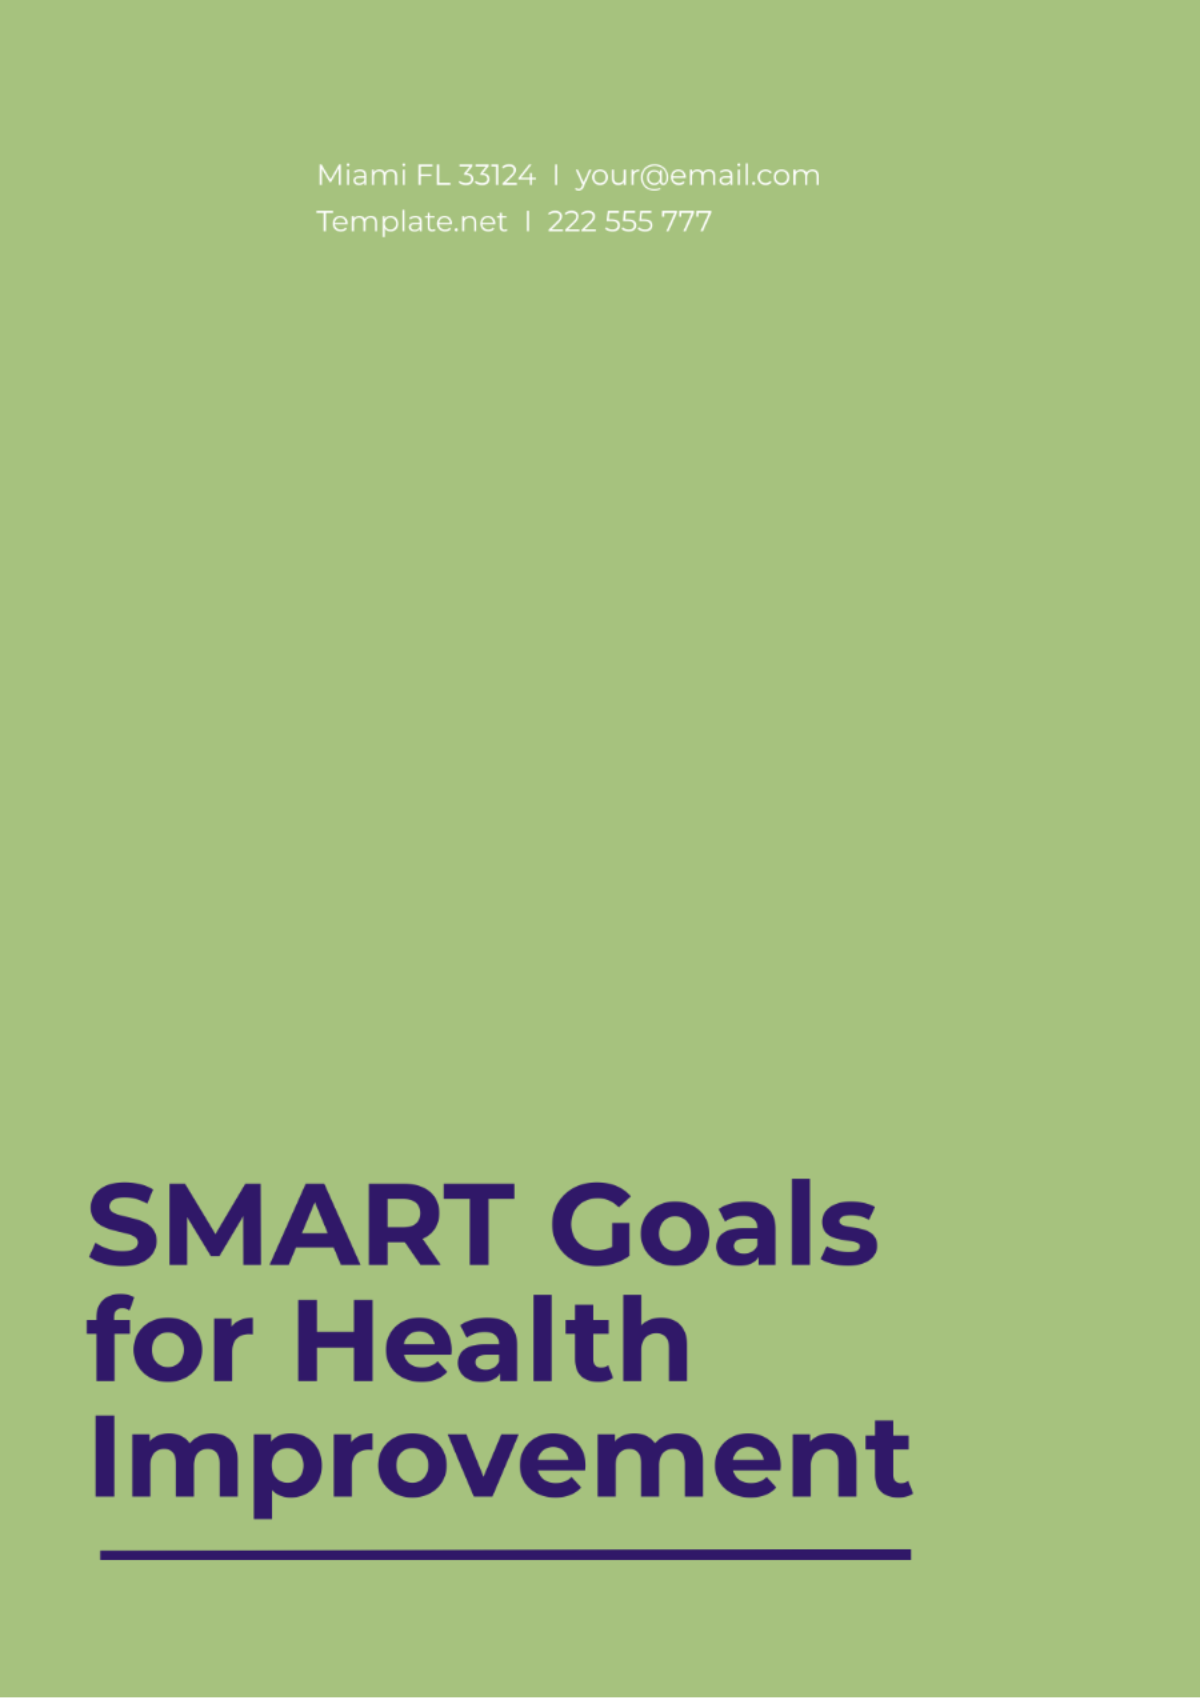 Free SMART Goals Template for Health Improvement